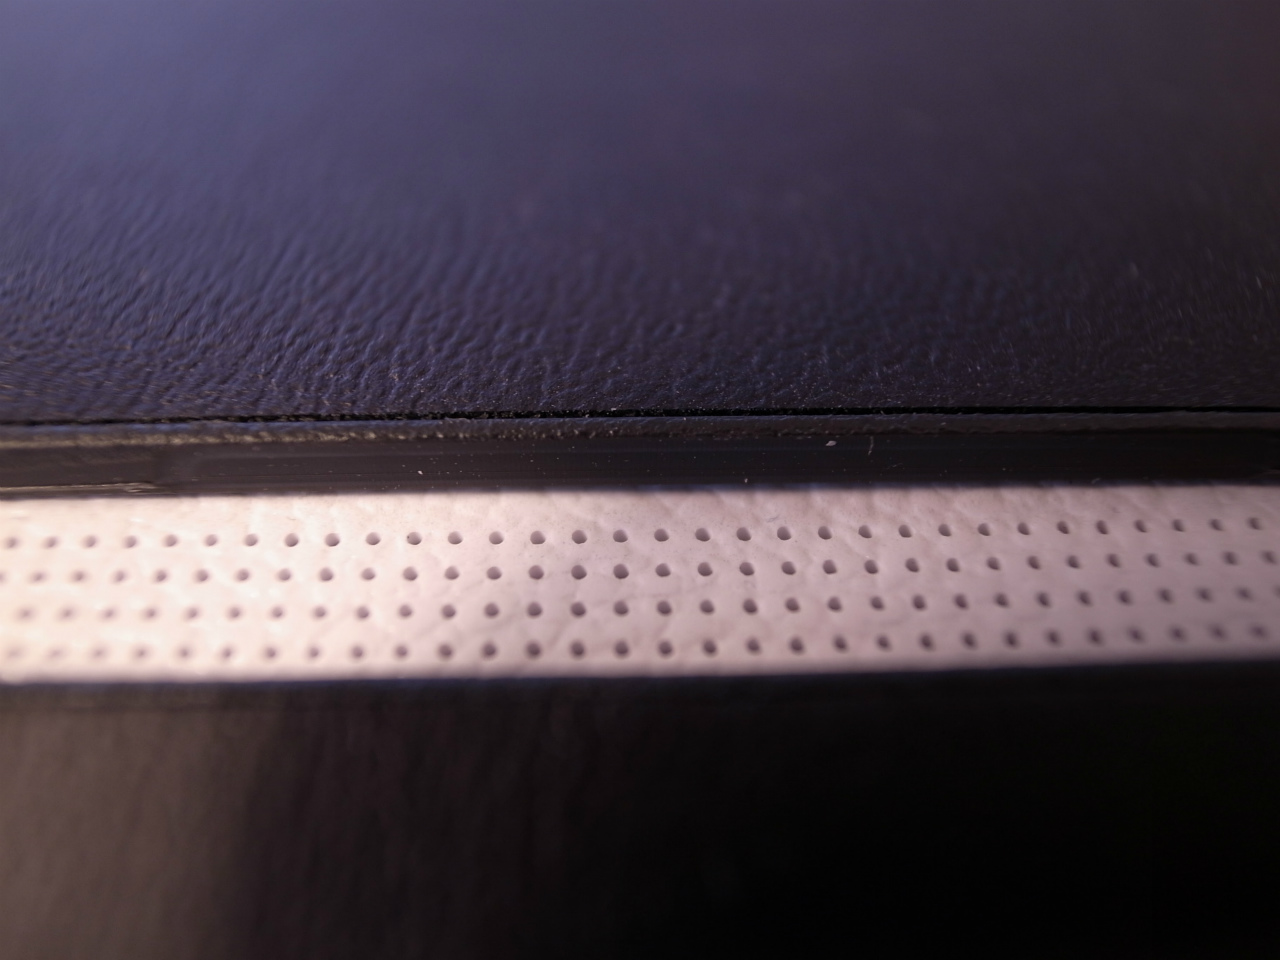 ZenFone Max VIEW FLIP CASE Goのカバーに比べて3分の2から半分くらいの厚みのような印象を受けます。